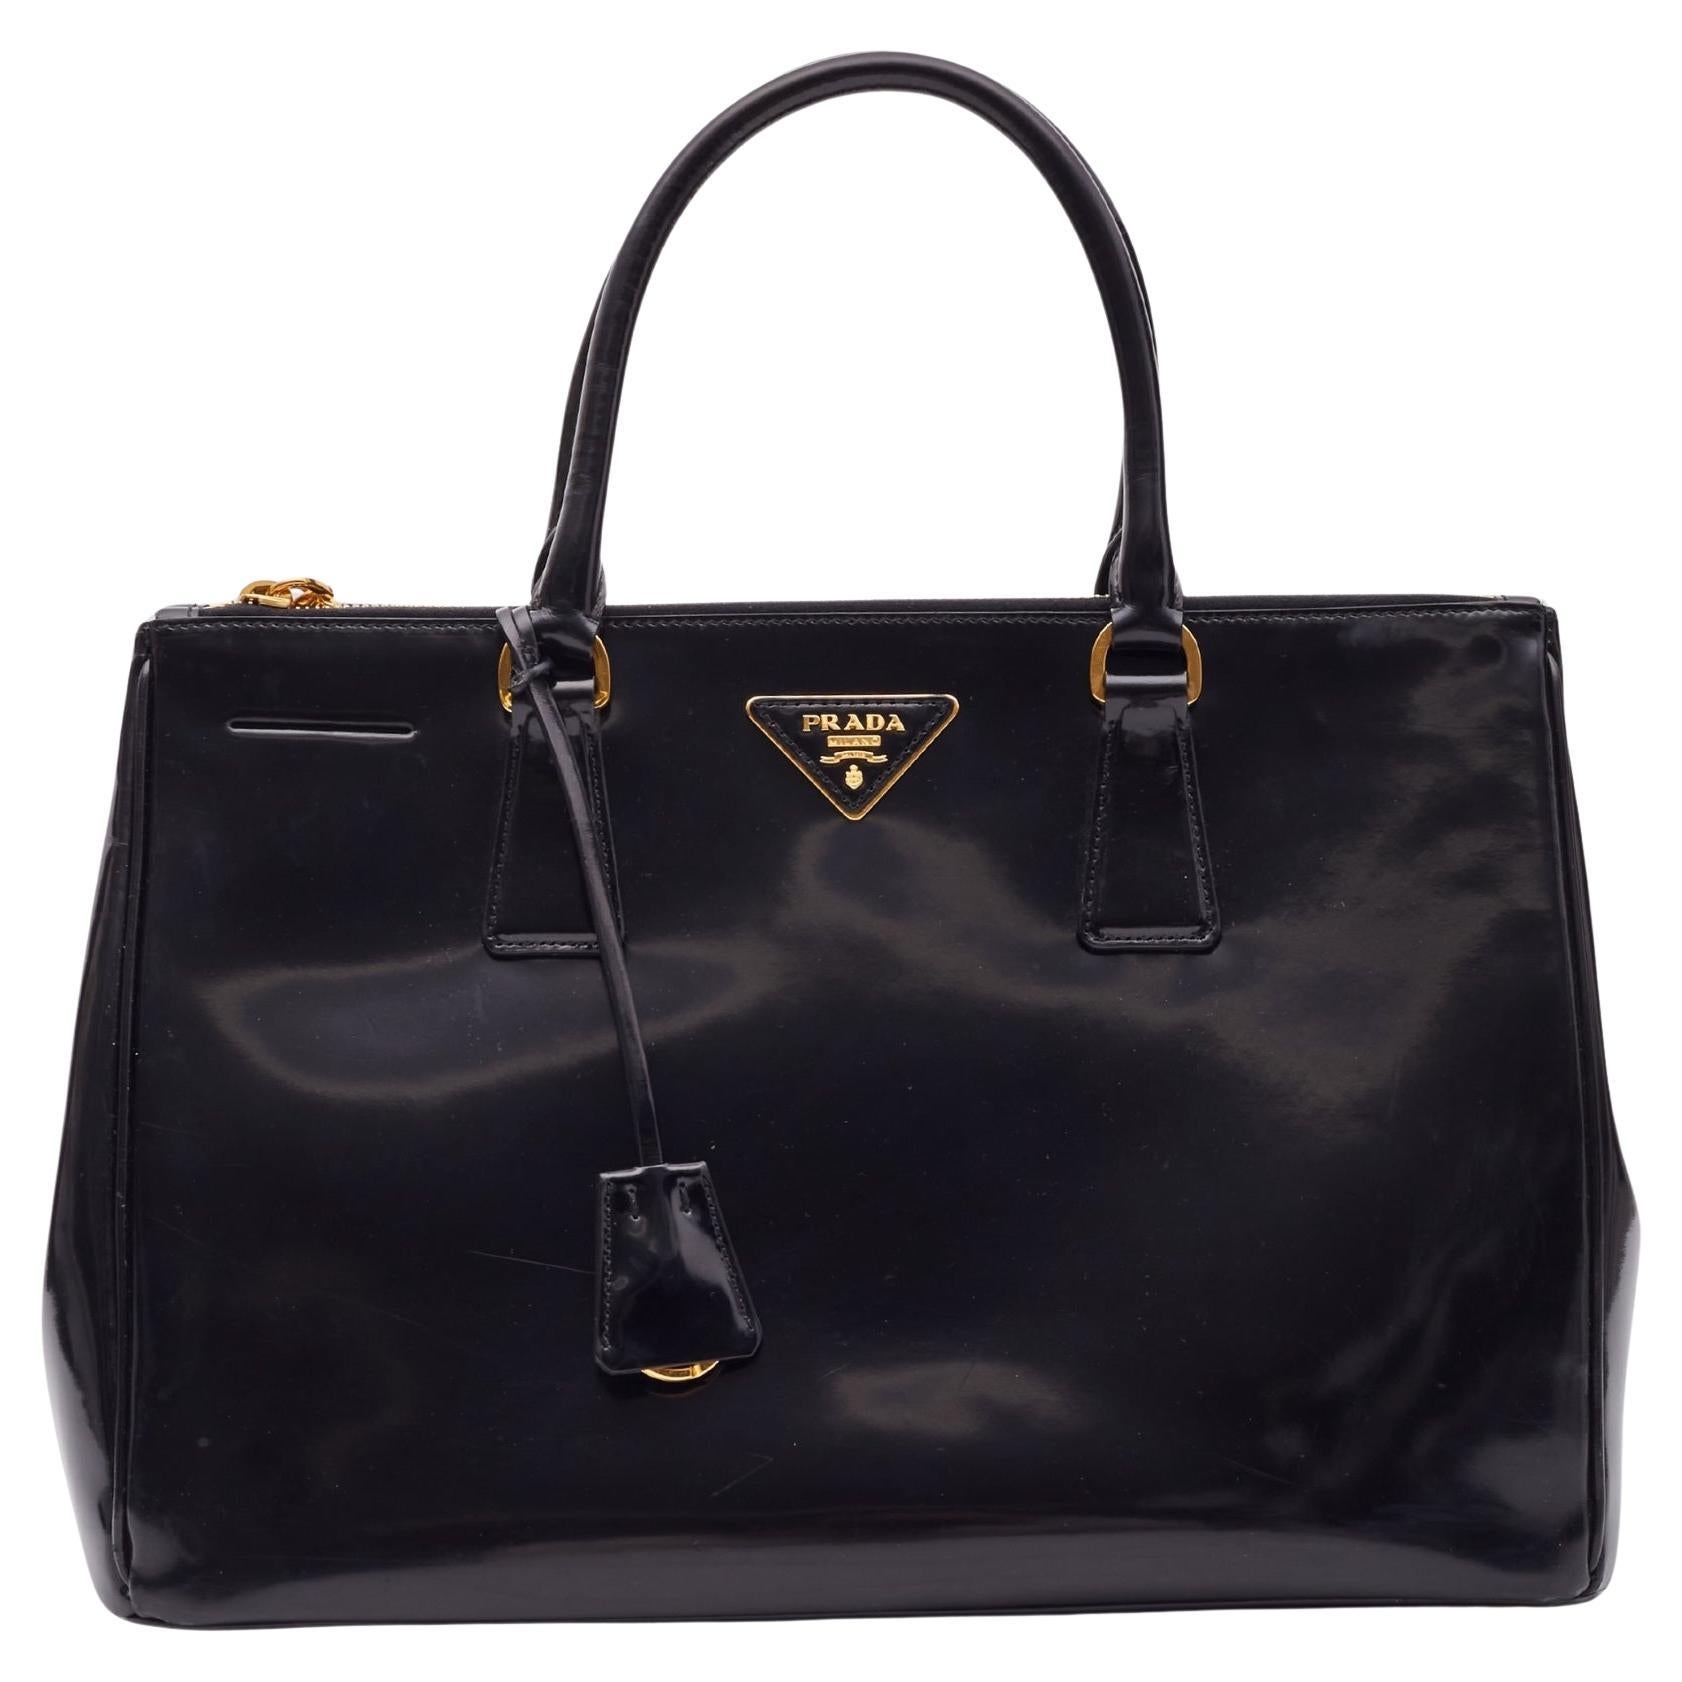 Prada Black Patent Leather Galleria Tote Bag For Sale